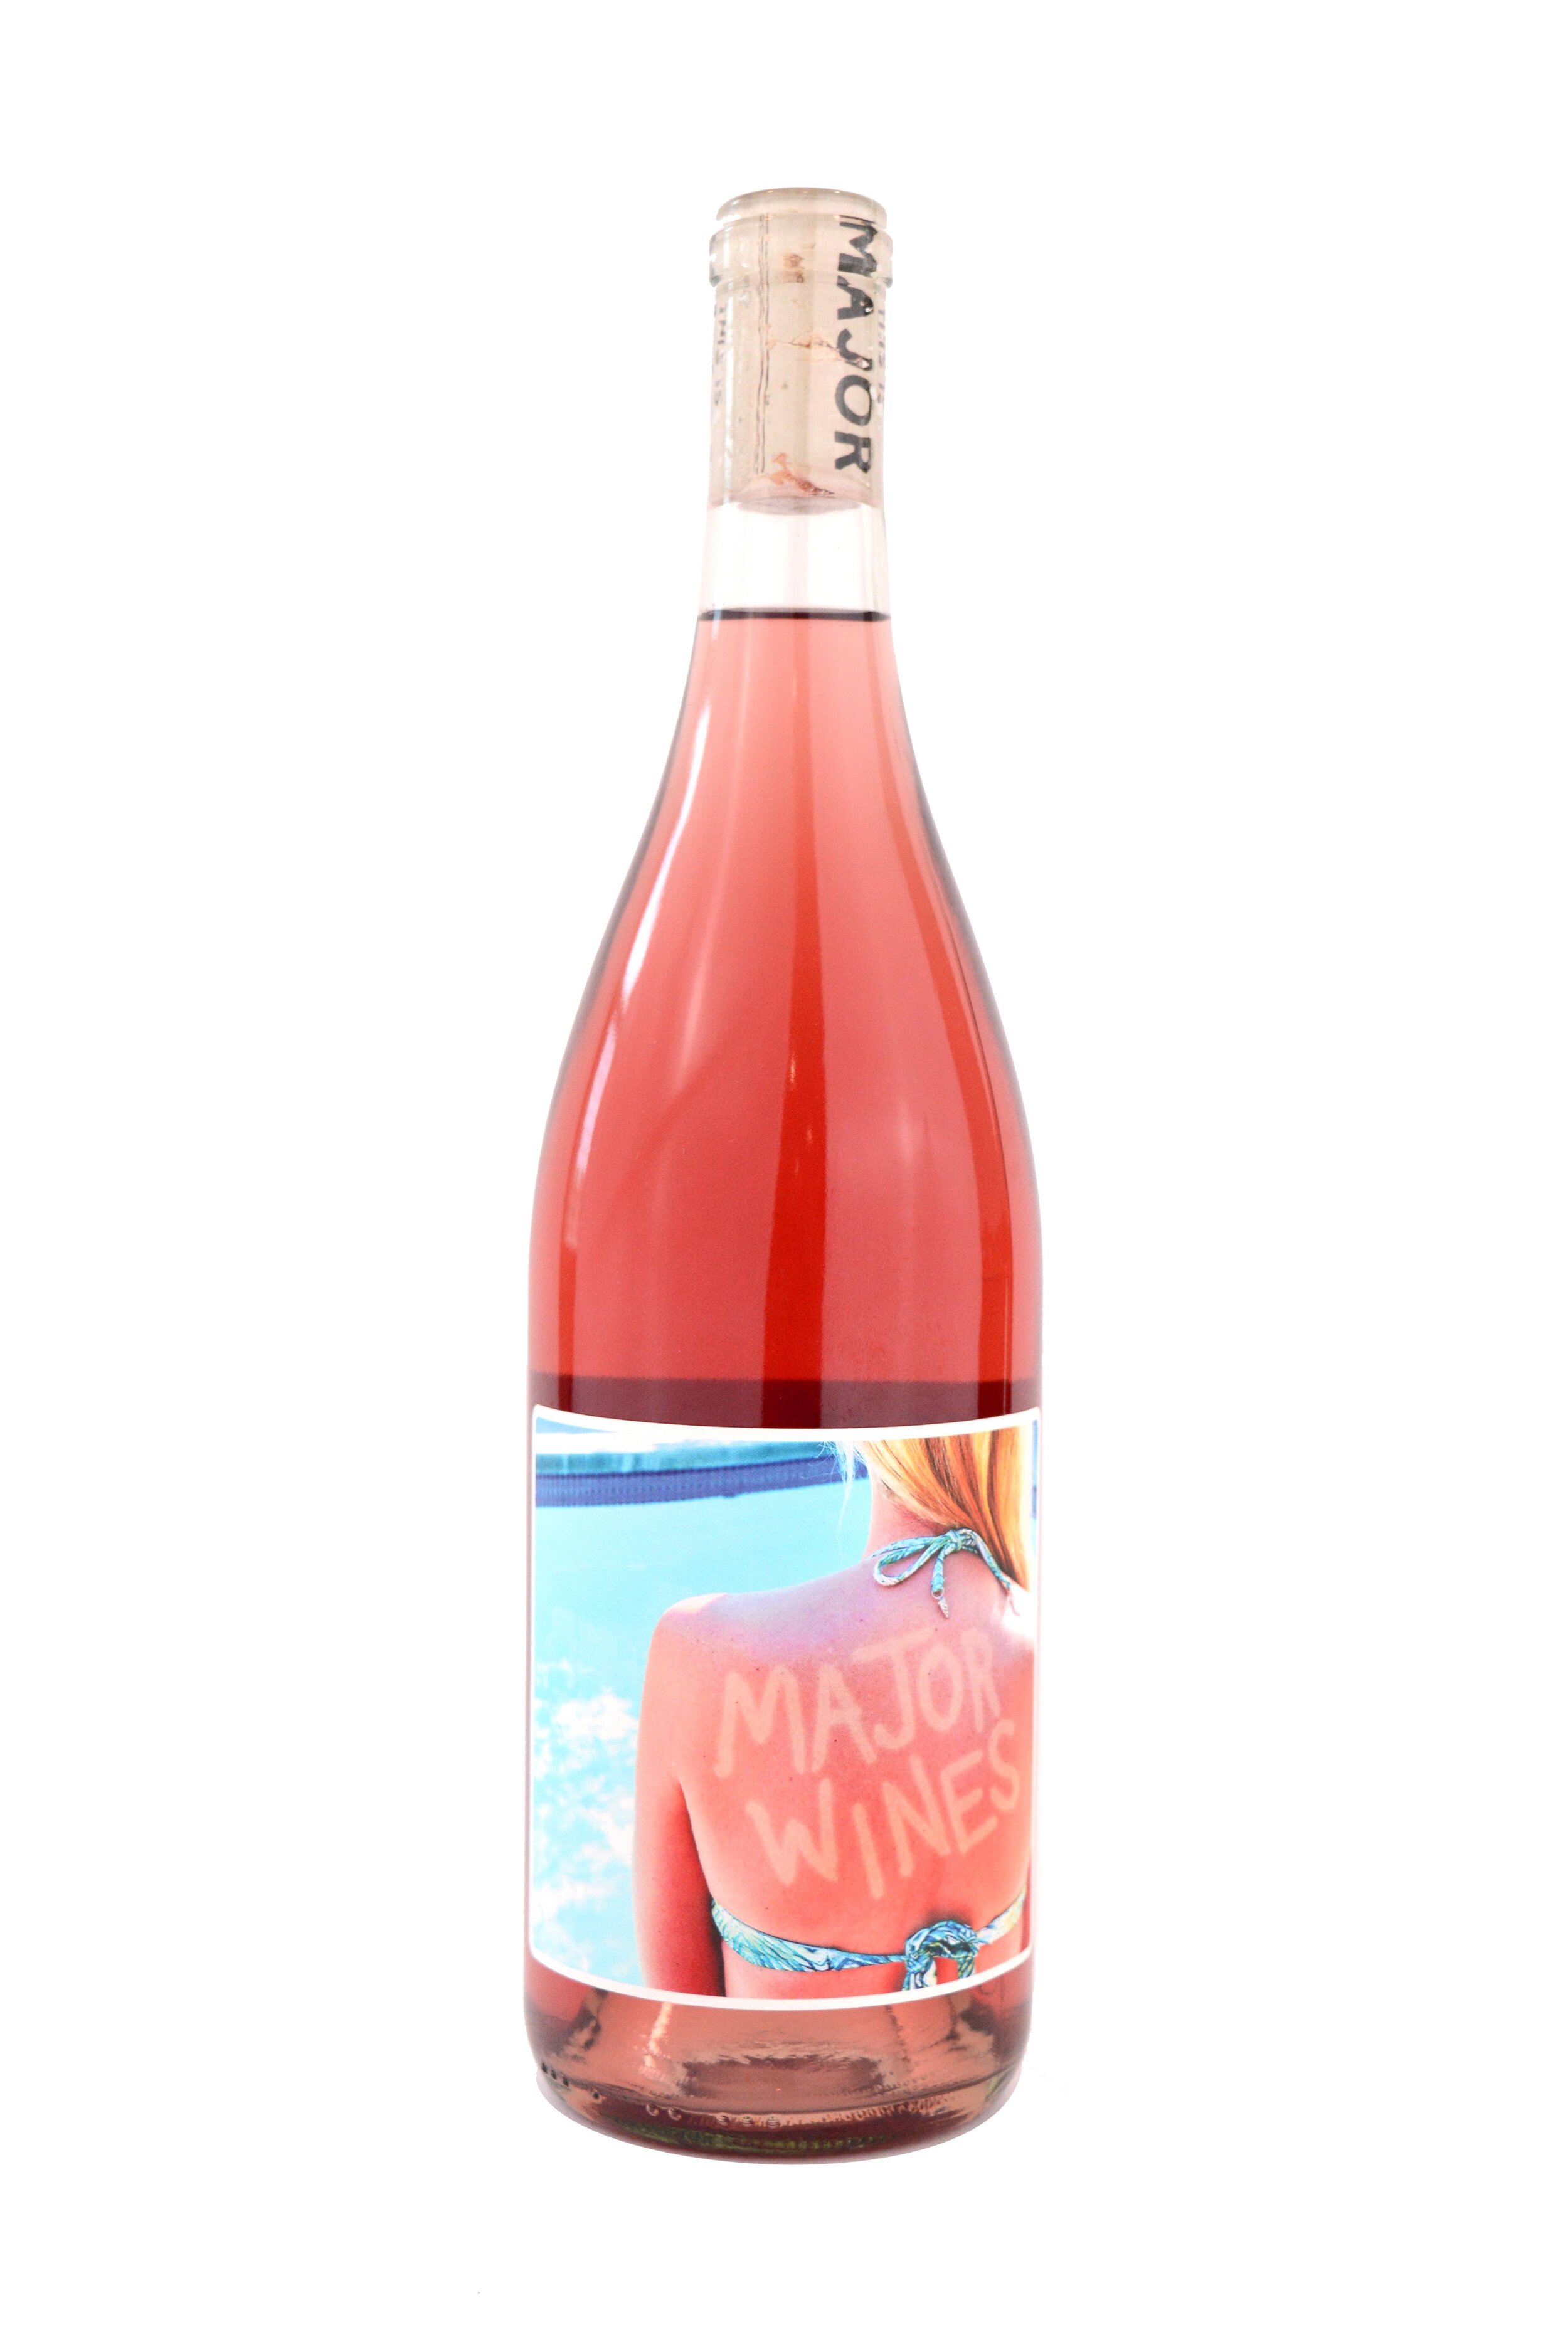 2020 Rosé of Pinot Noir — Major Wines